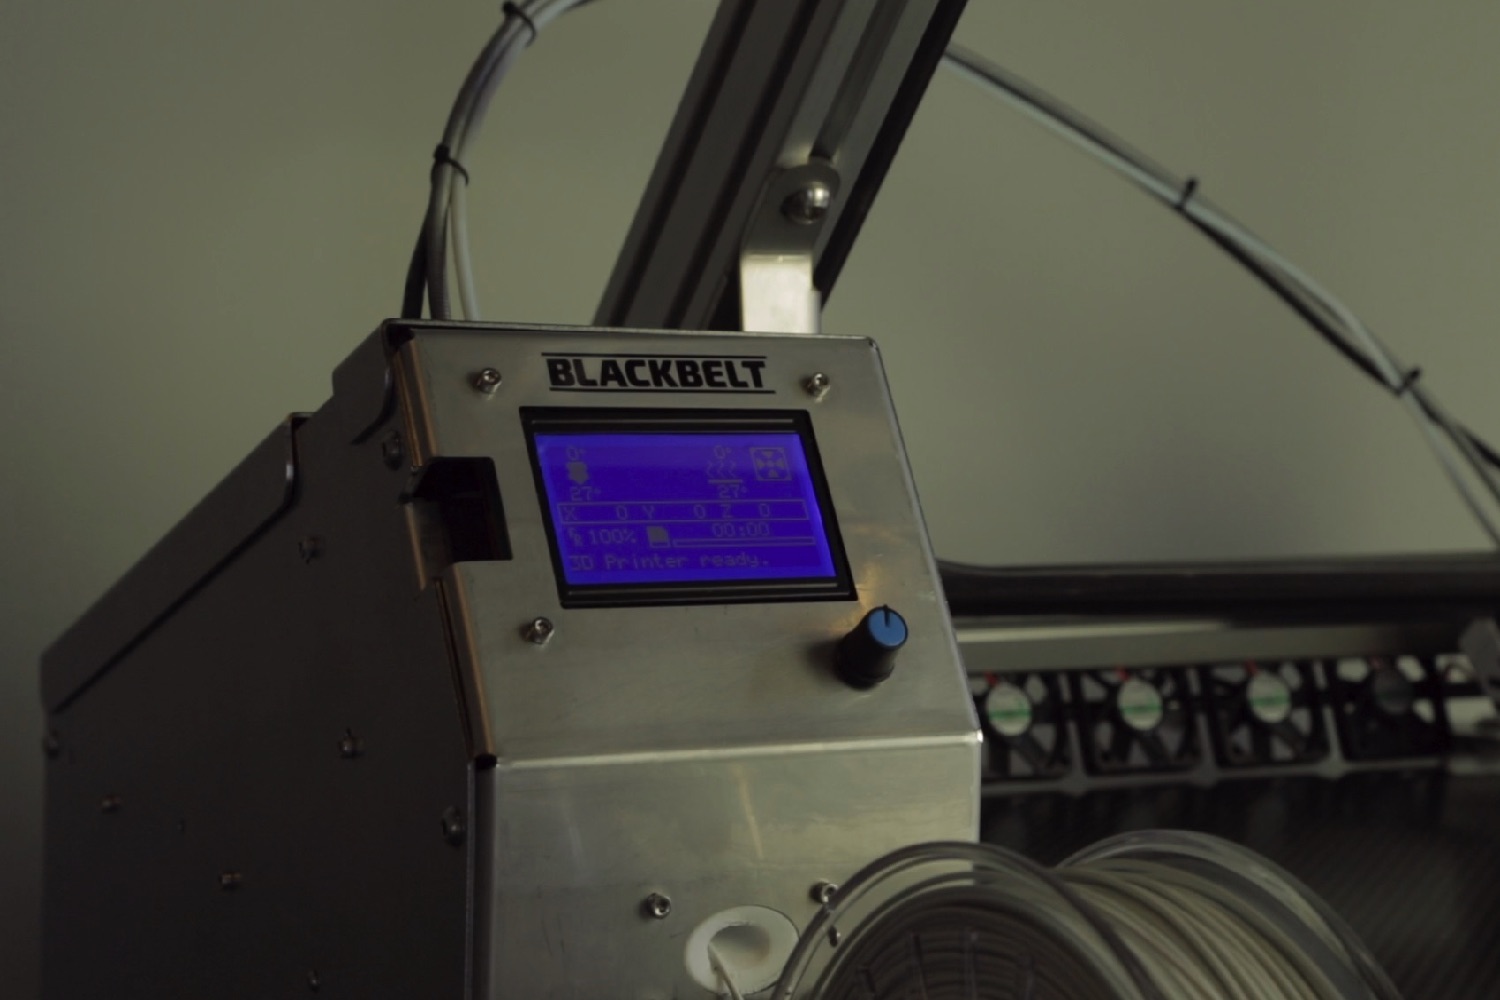 blackbelt 3d printer controller